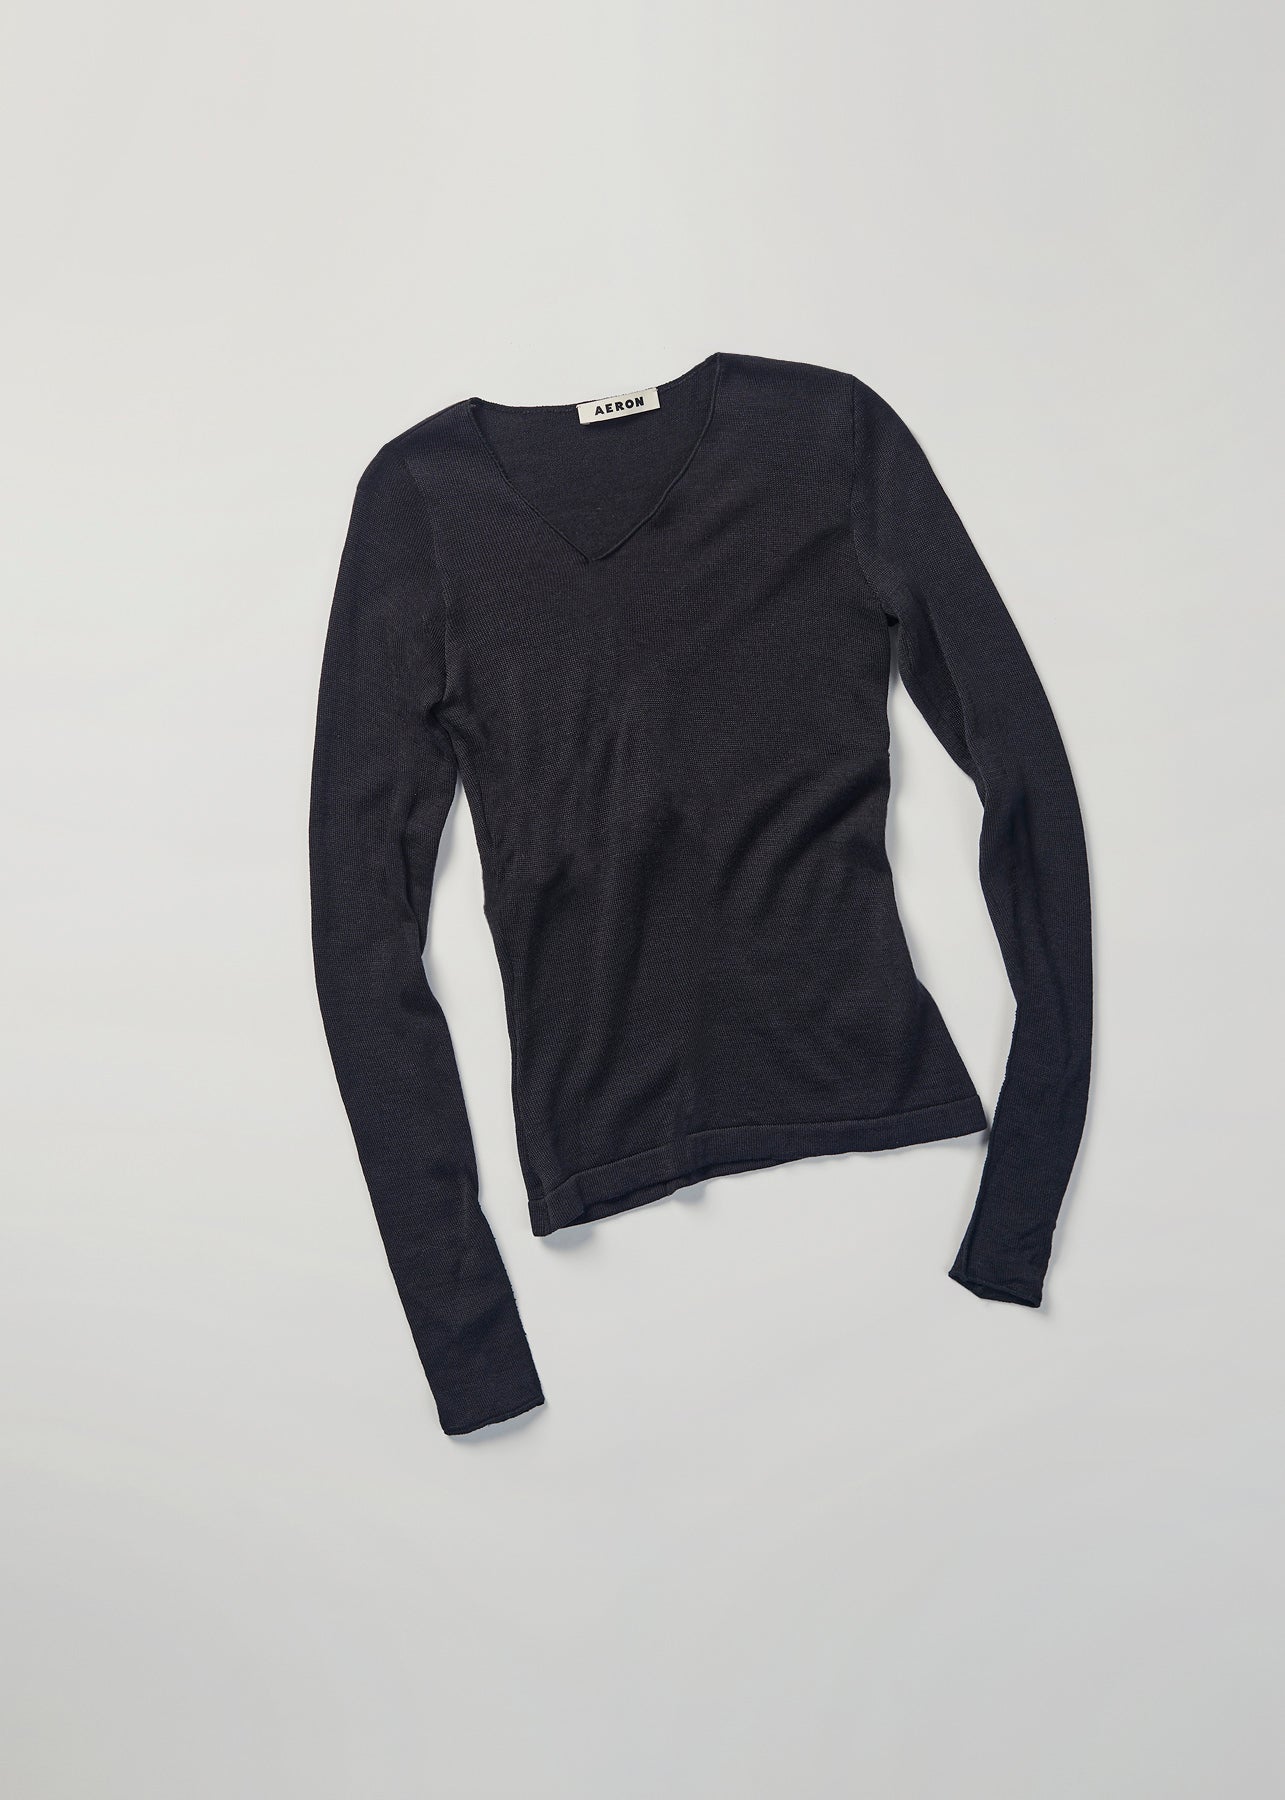 AERON FRAME Asymmetric V-neck wool sweater – graphite